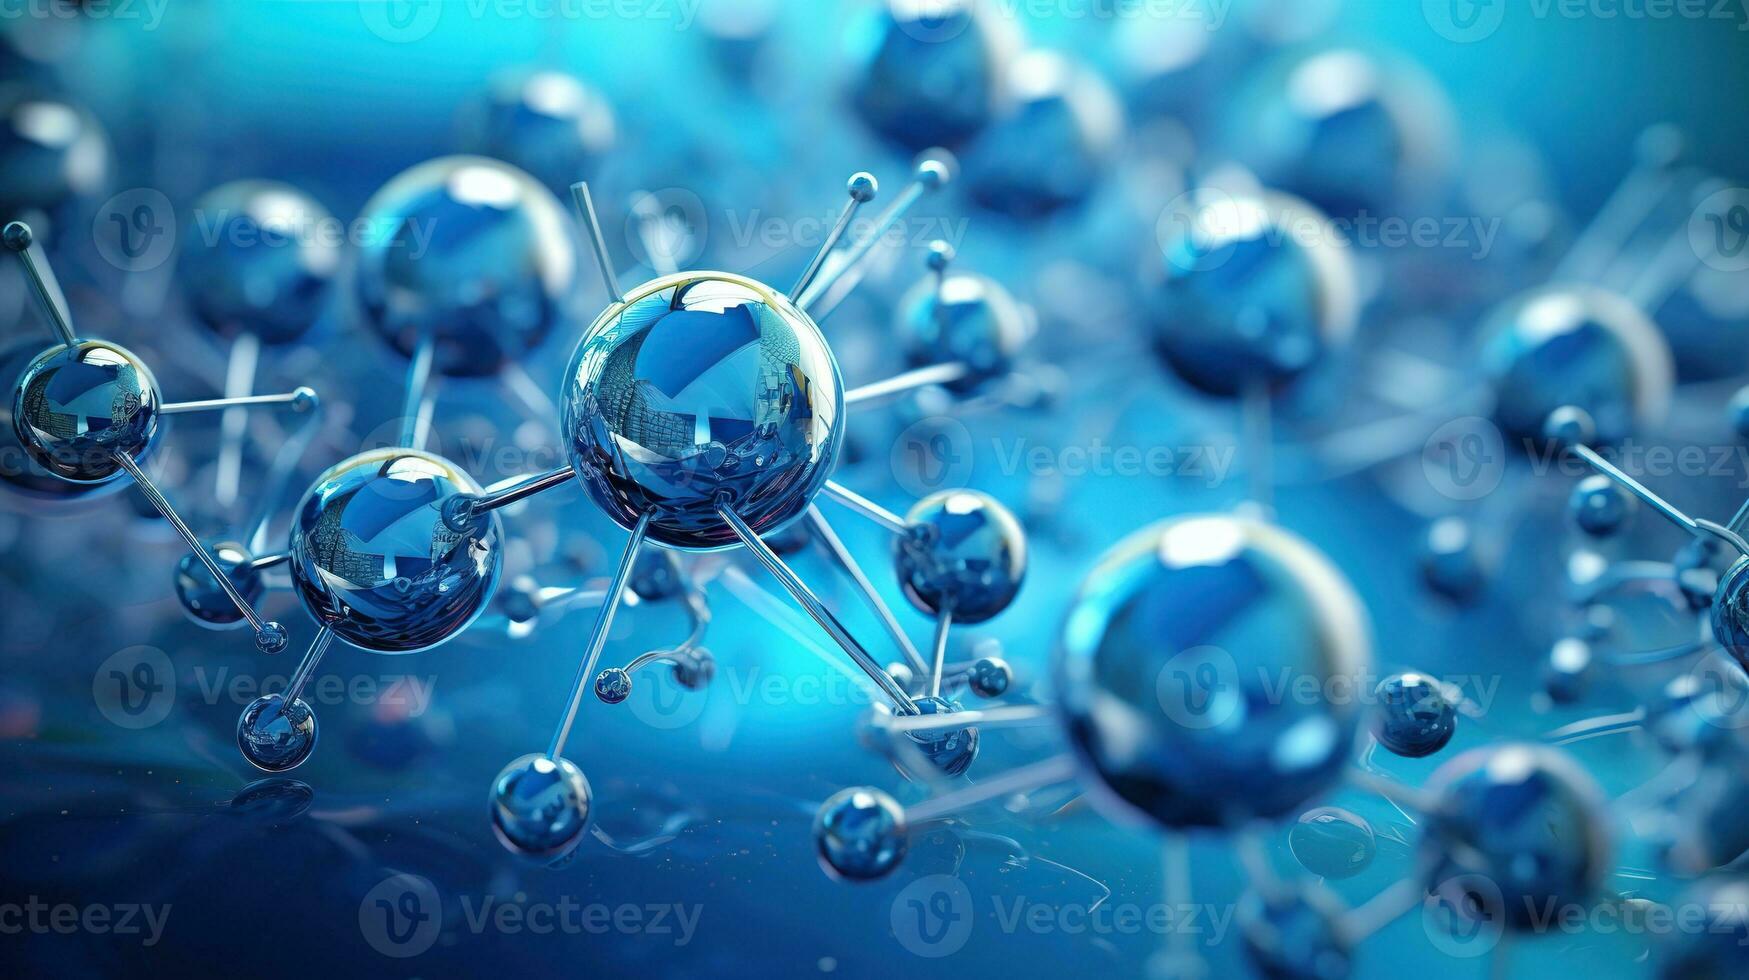 abstrakt Moleküle Design. Atome. molekular Struktur mit Blau kugelförmig Partikel. foto